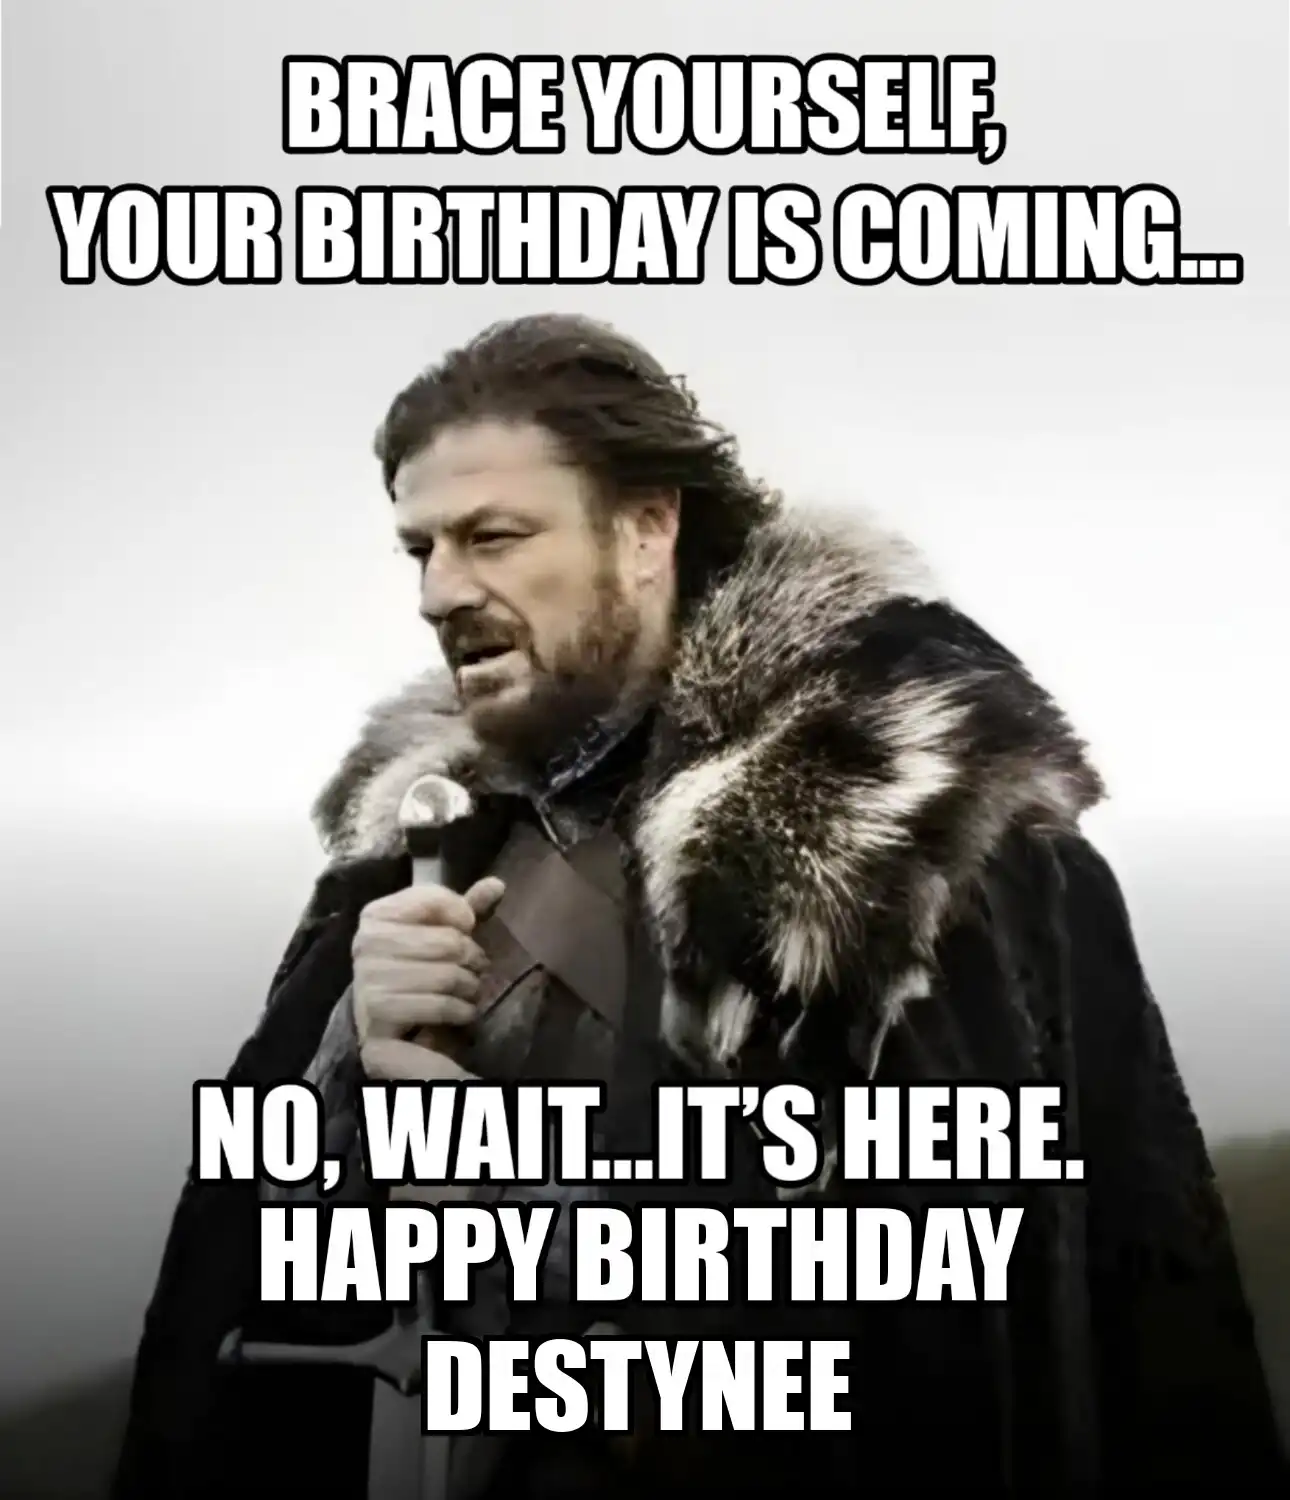 Happy Birthday Destynee Brace Yourself Your Birthday Is Coming Meme